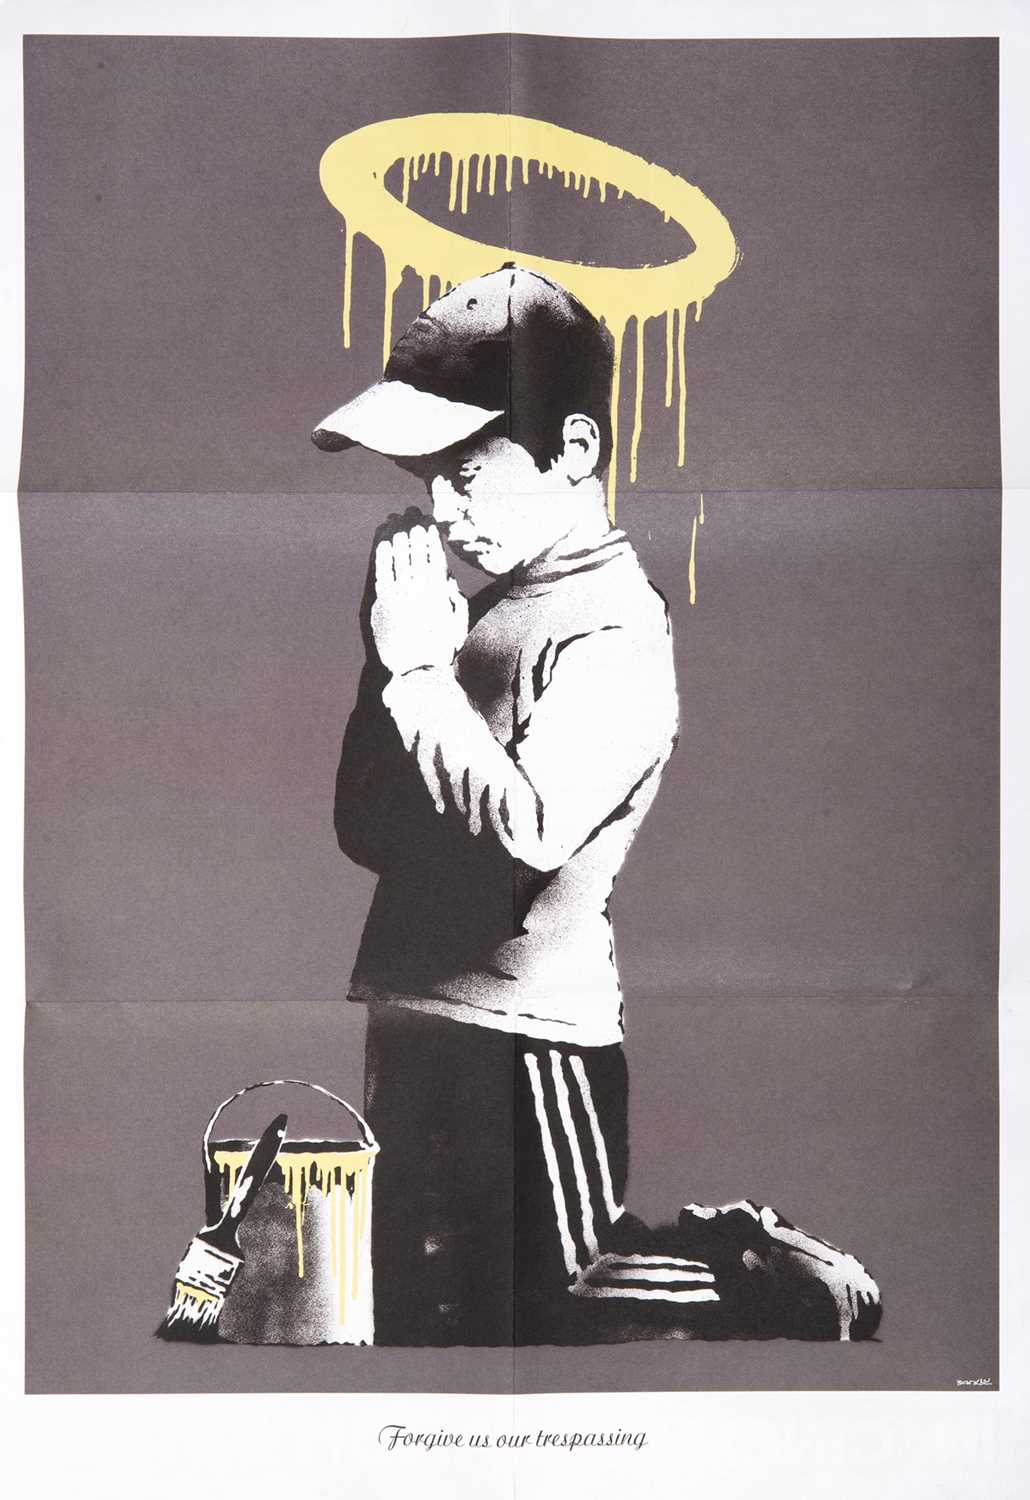 Lot 22 - Banksy (British 1974-), ‘Forgive Us Our Trespassing’, 2010